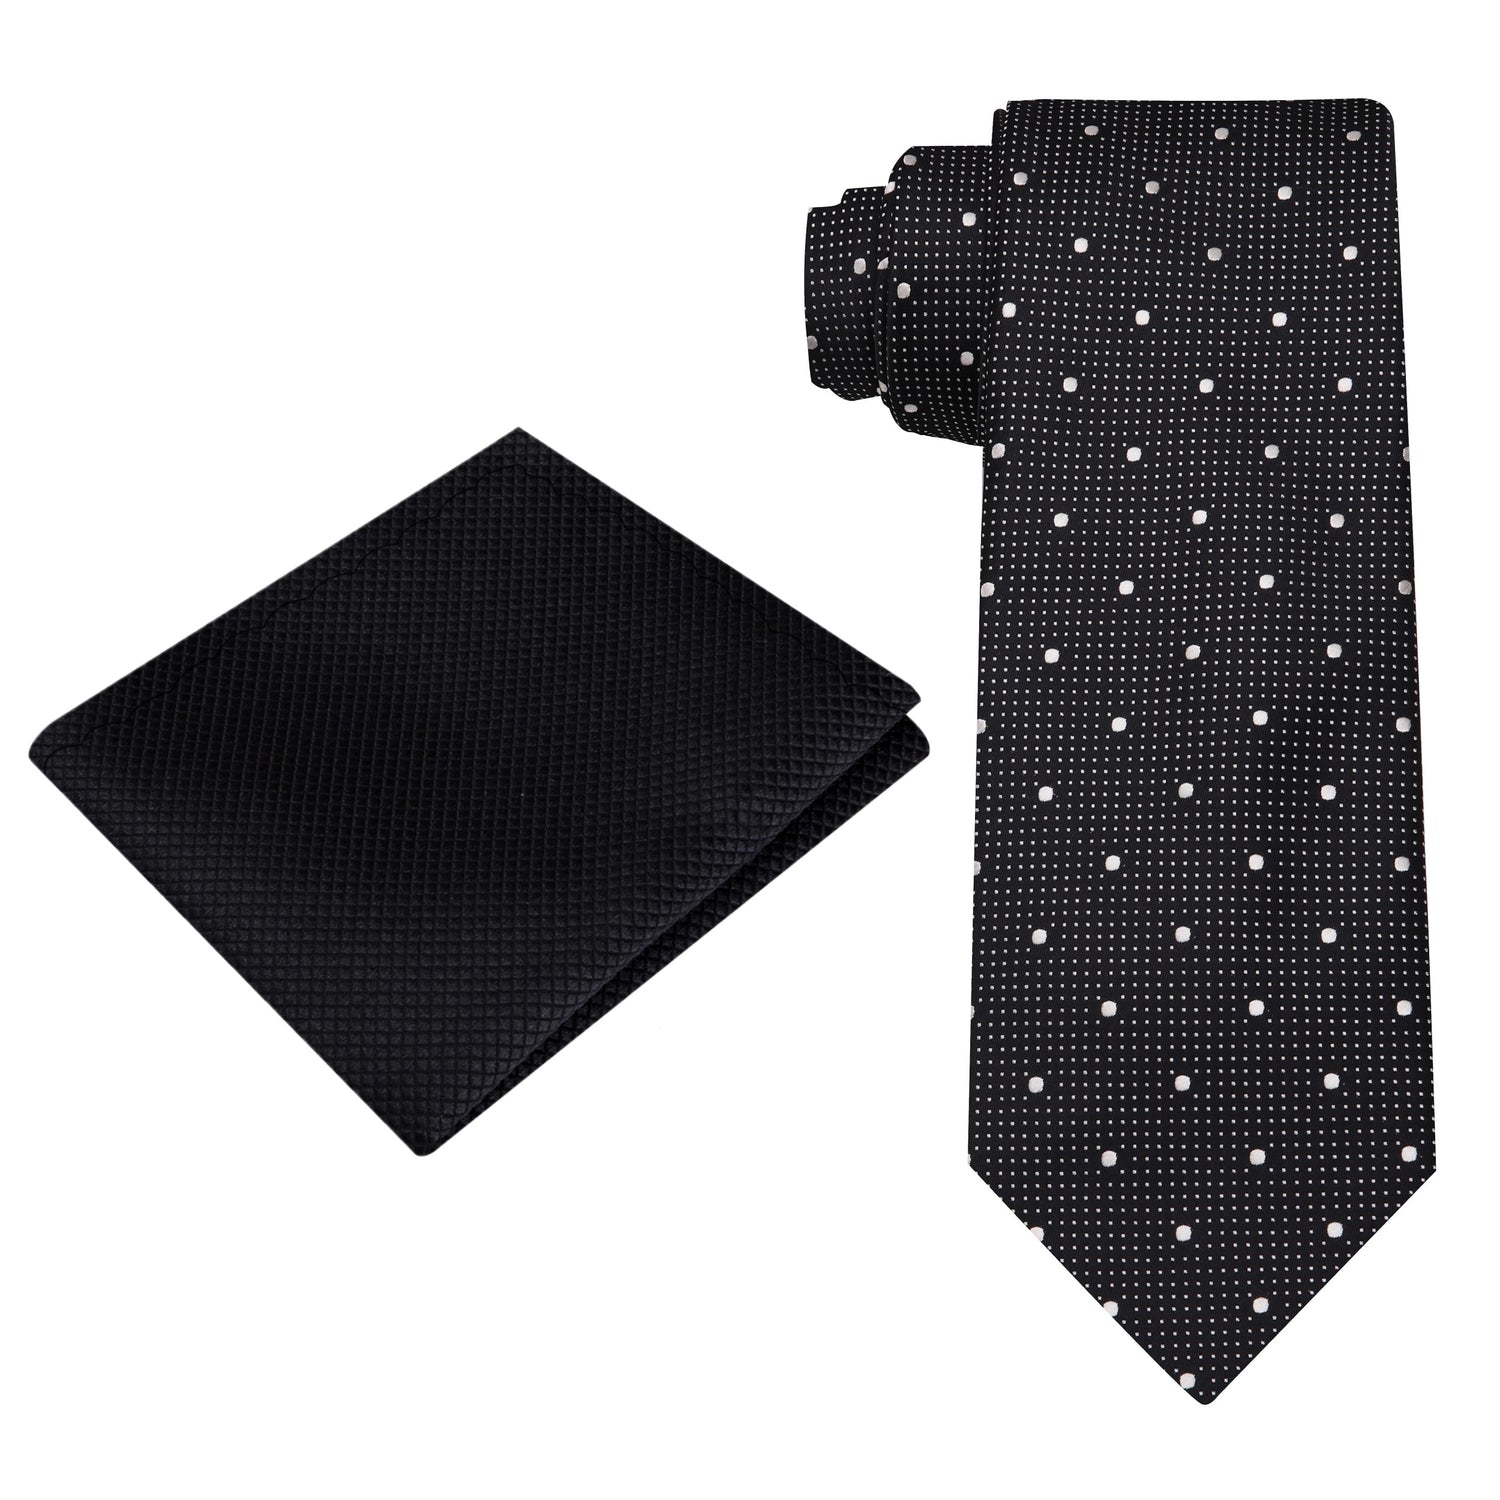 Alt View: Black, White Polka Tie and Black Pocket Square